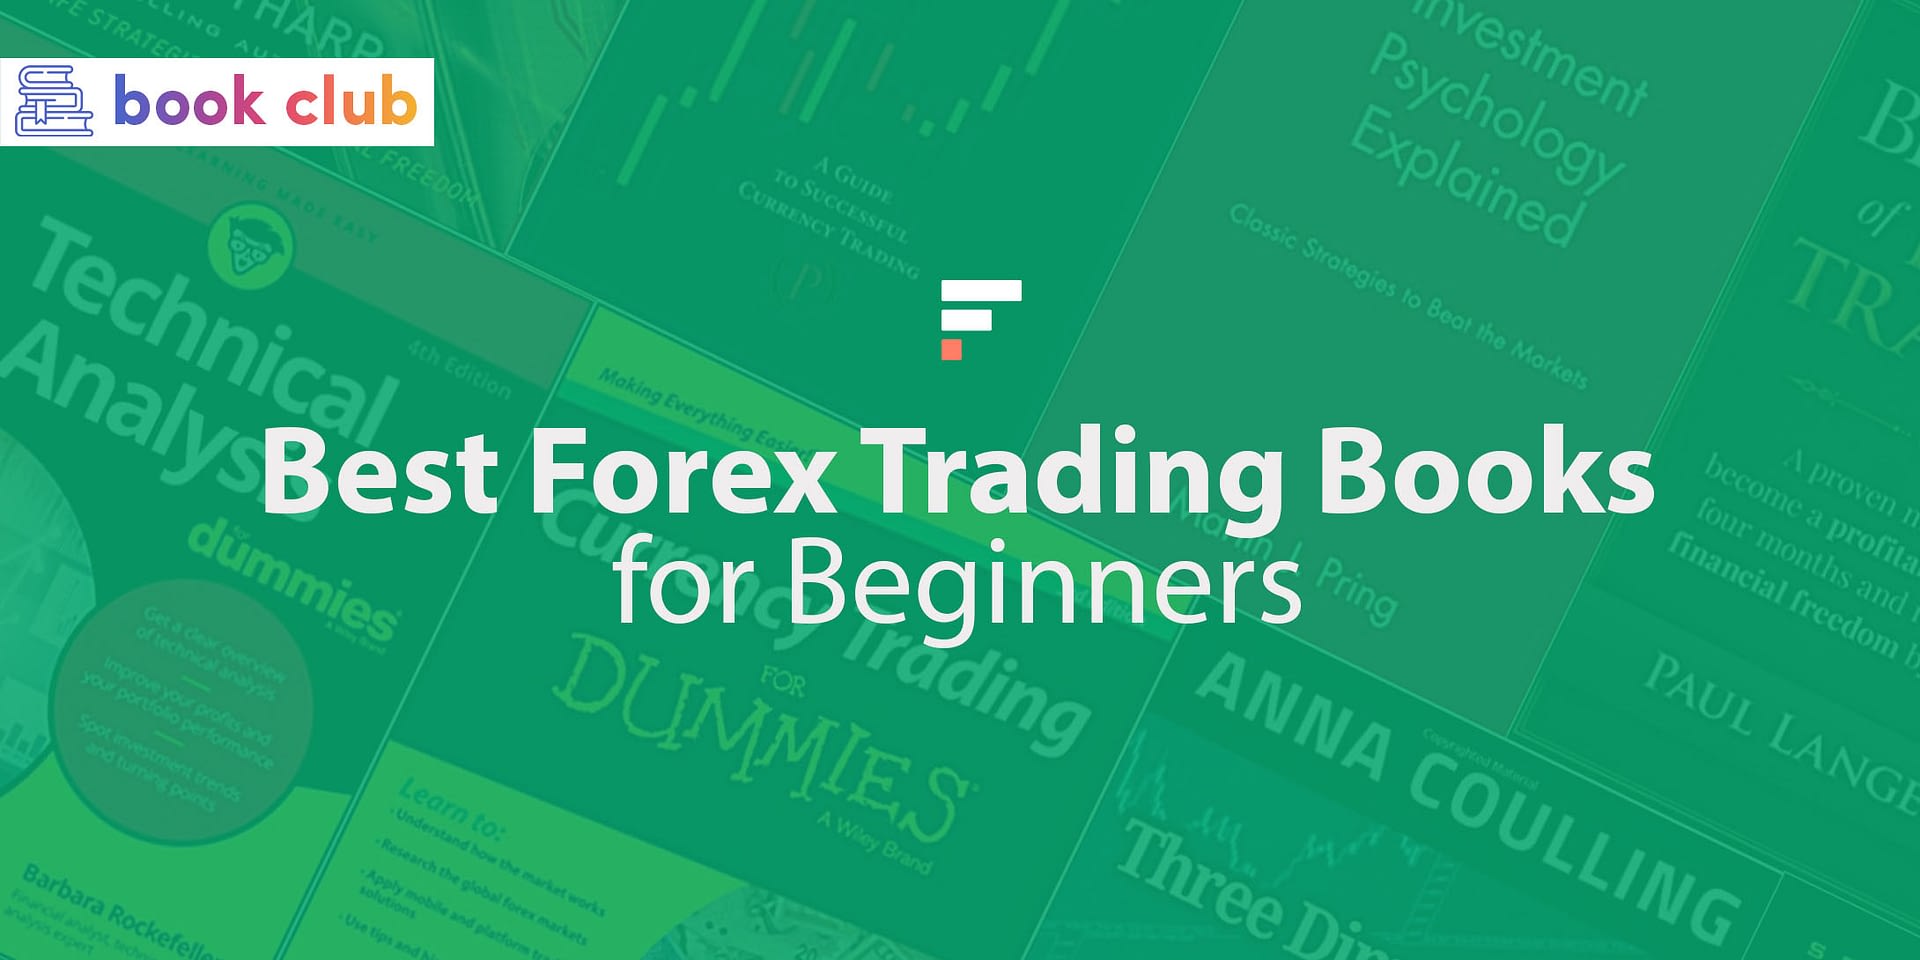 7 Best Forex Trading Books for Beginners